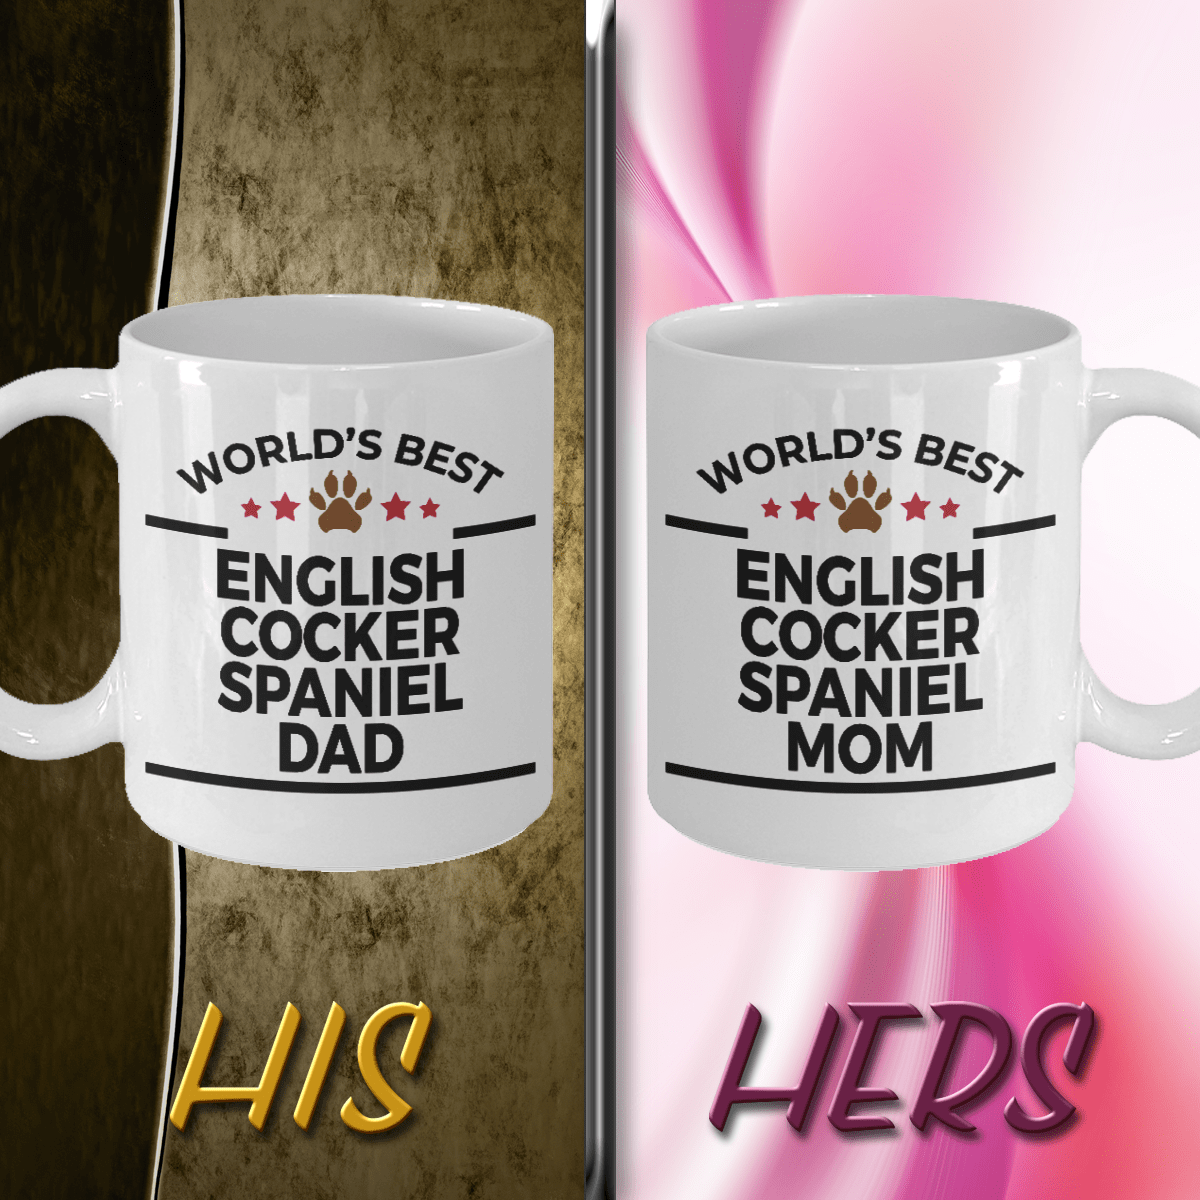 English Cocker Spaniel Dad and Mom Couples Mug - Set of 2 - His and Hers